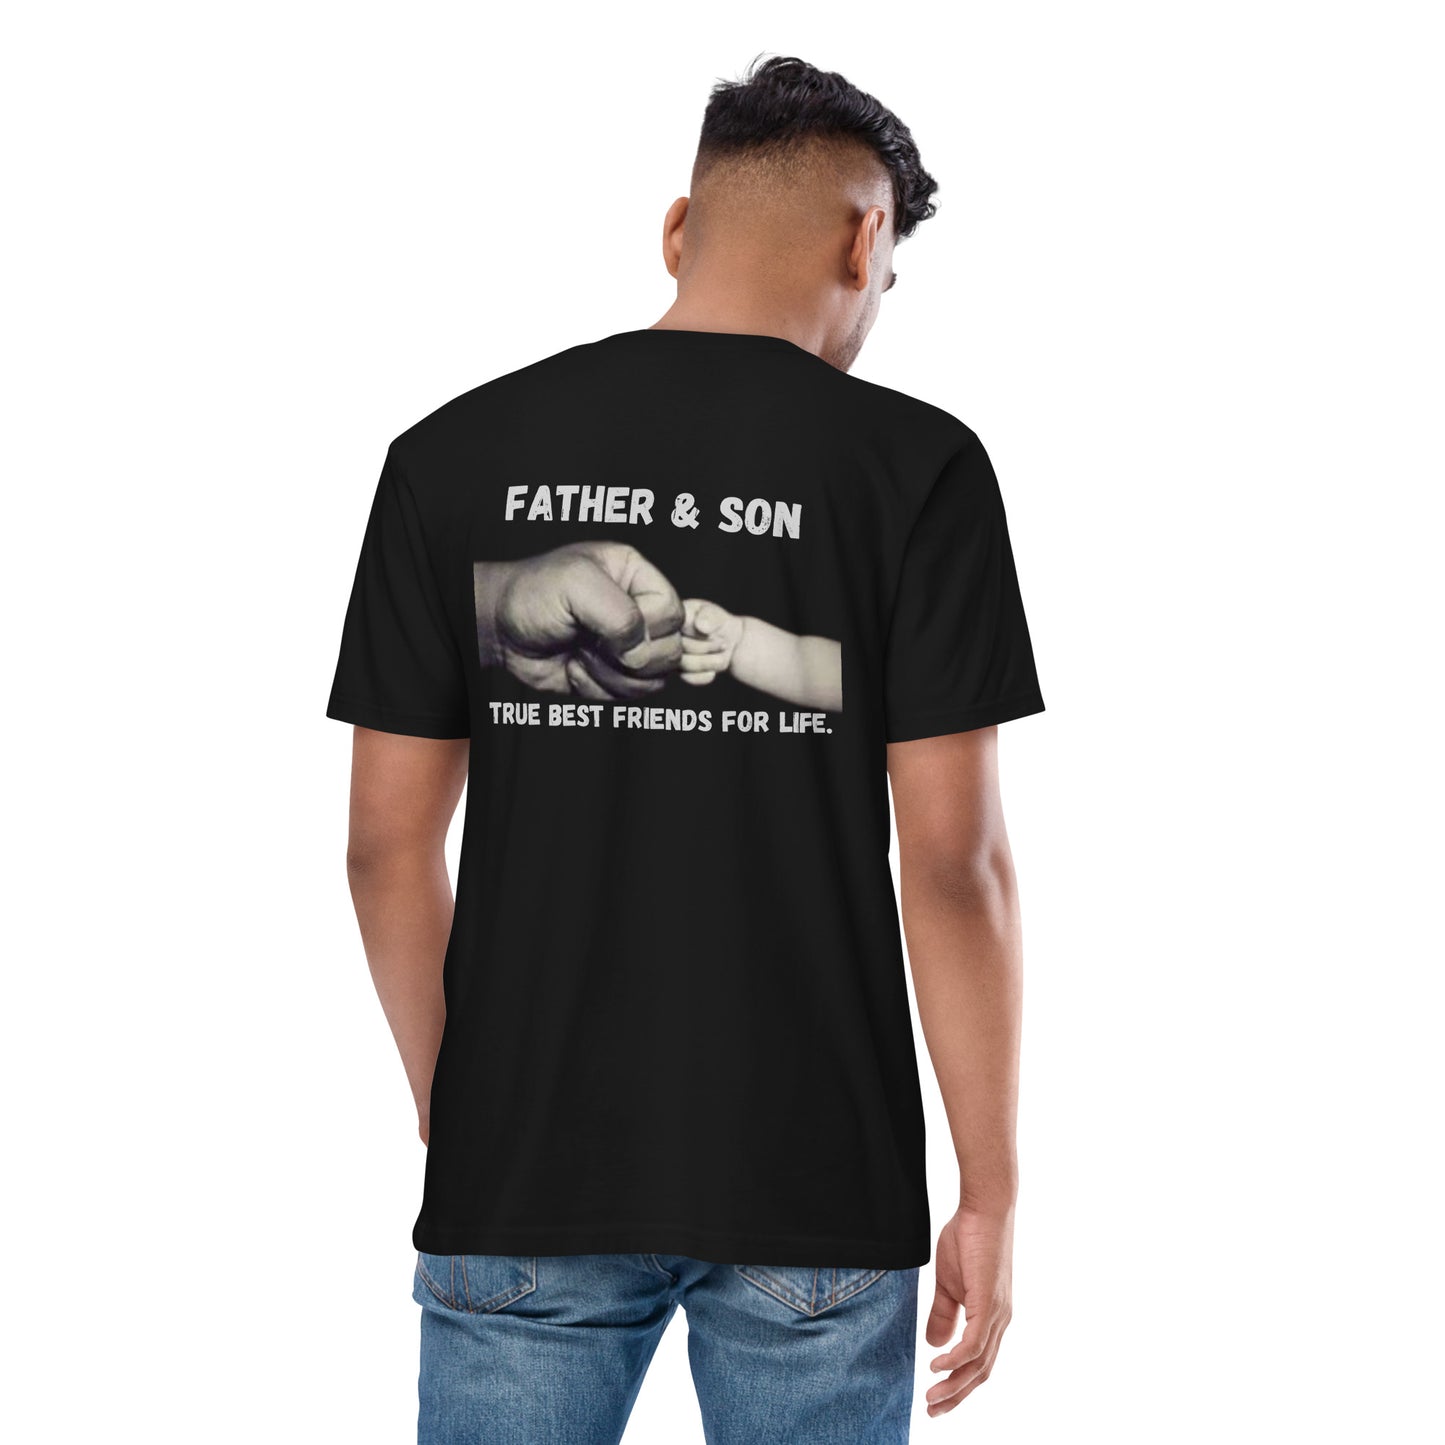 "Father & Son" Men’s Premium heavyweight tee